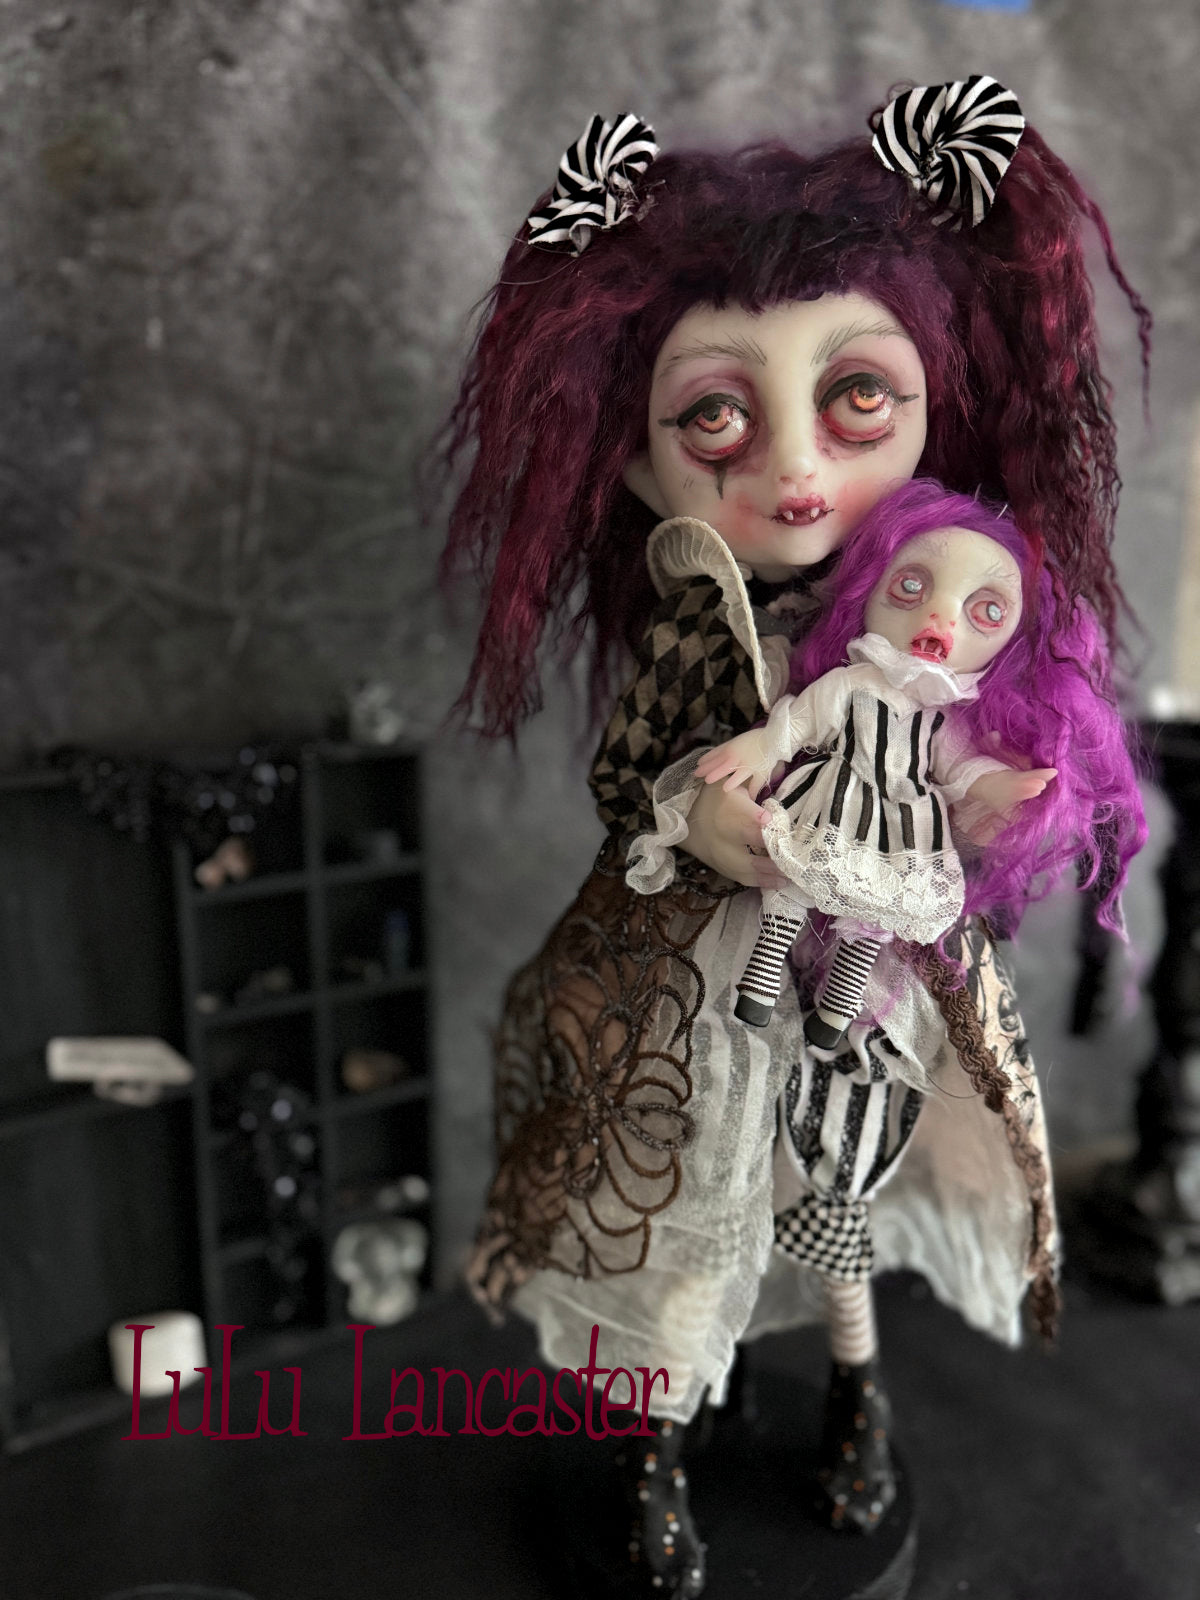 Marguerite the Vampire Original LuLu Lancaster Art Doll